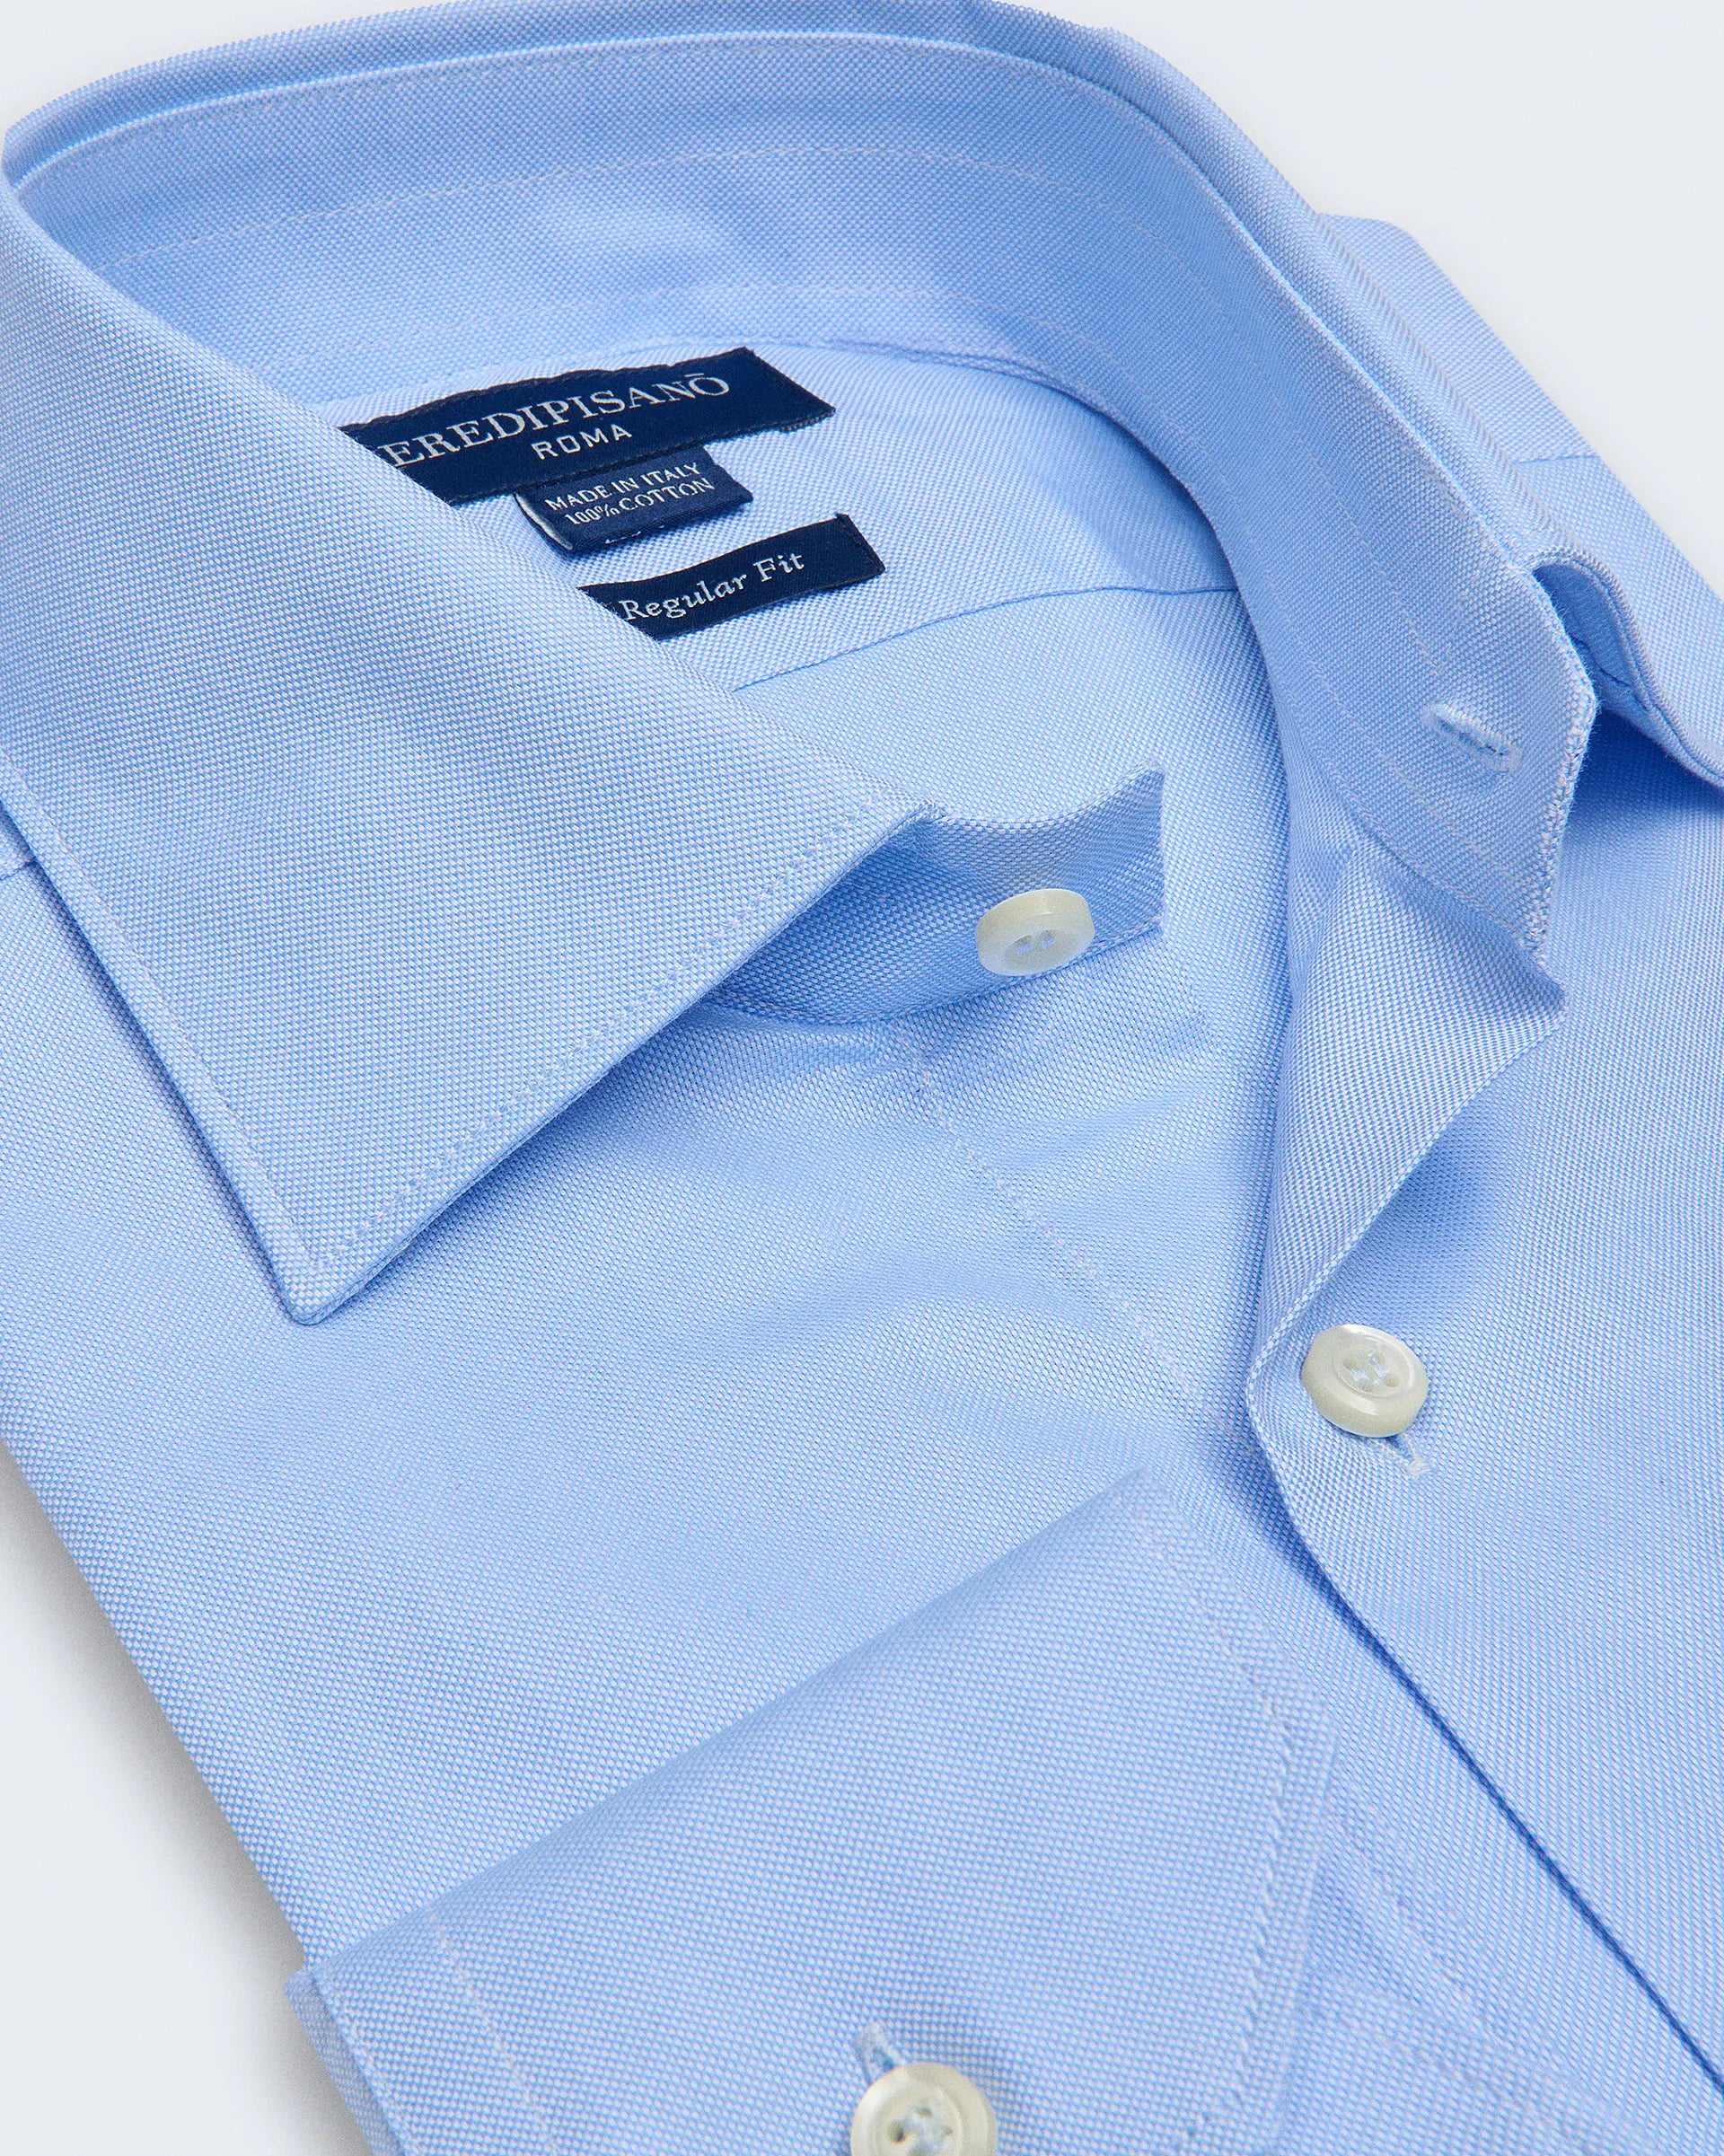 Light Blue Shirt Oxford Regular Fit with Cutaway Collar